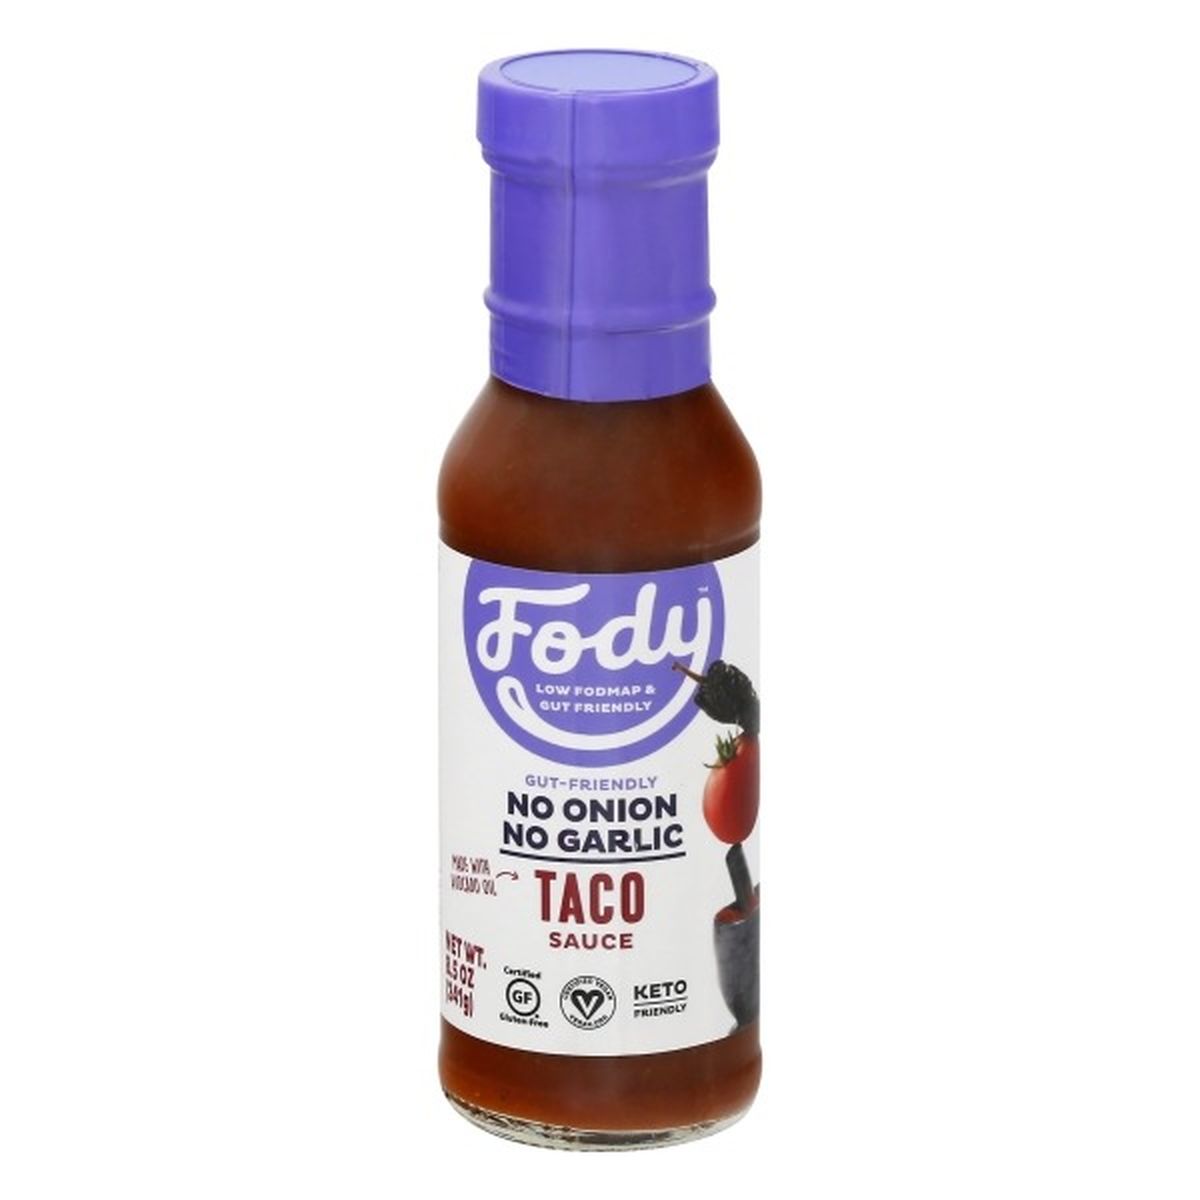 Calories in Fody Foods Taco Sauce